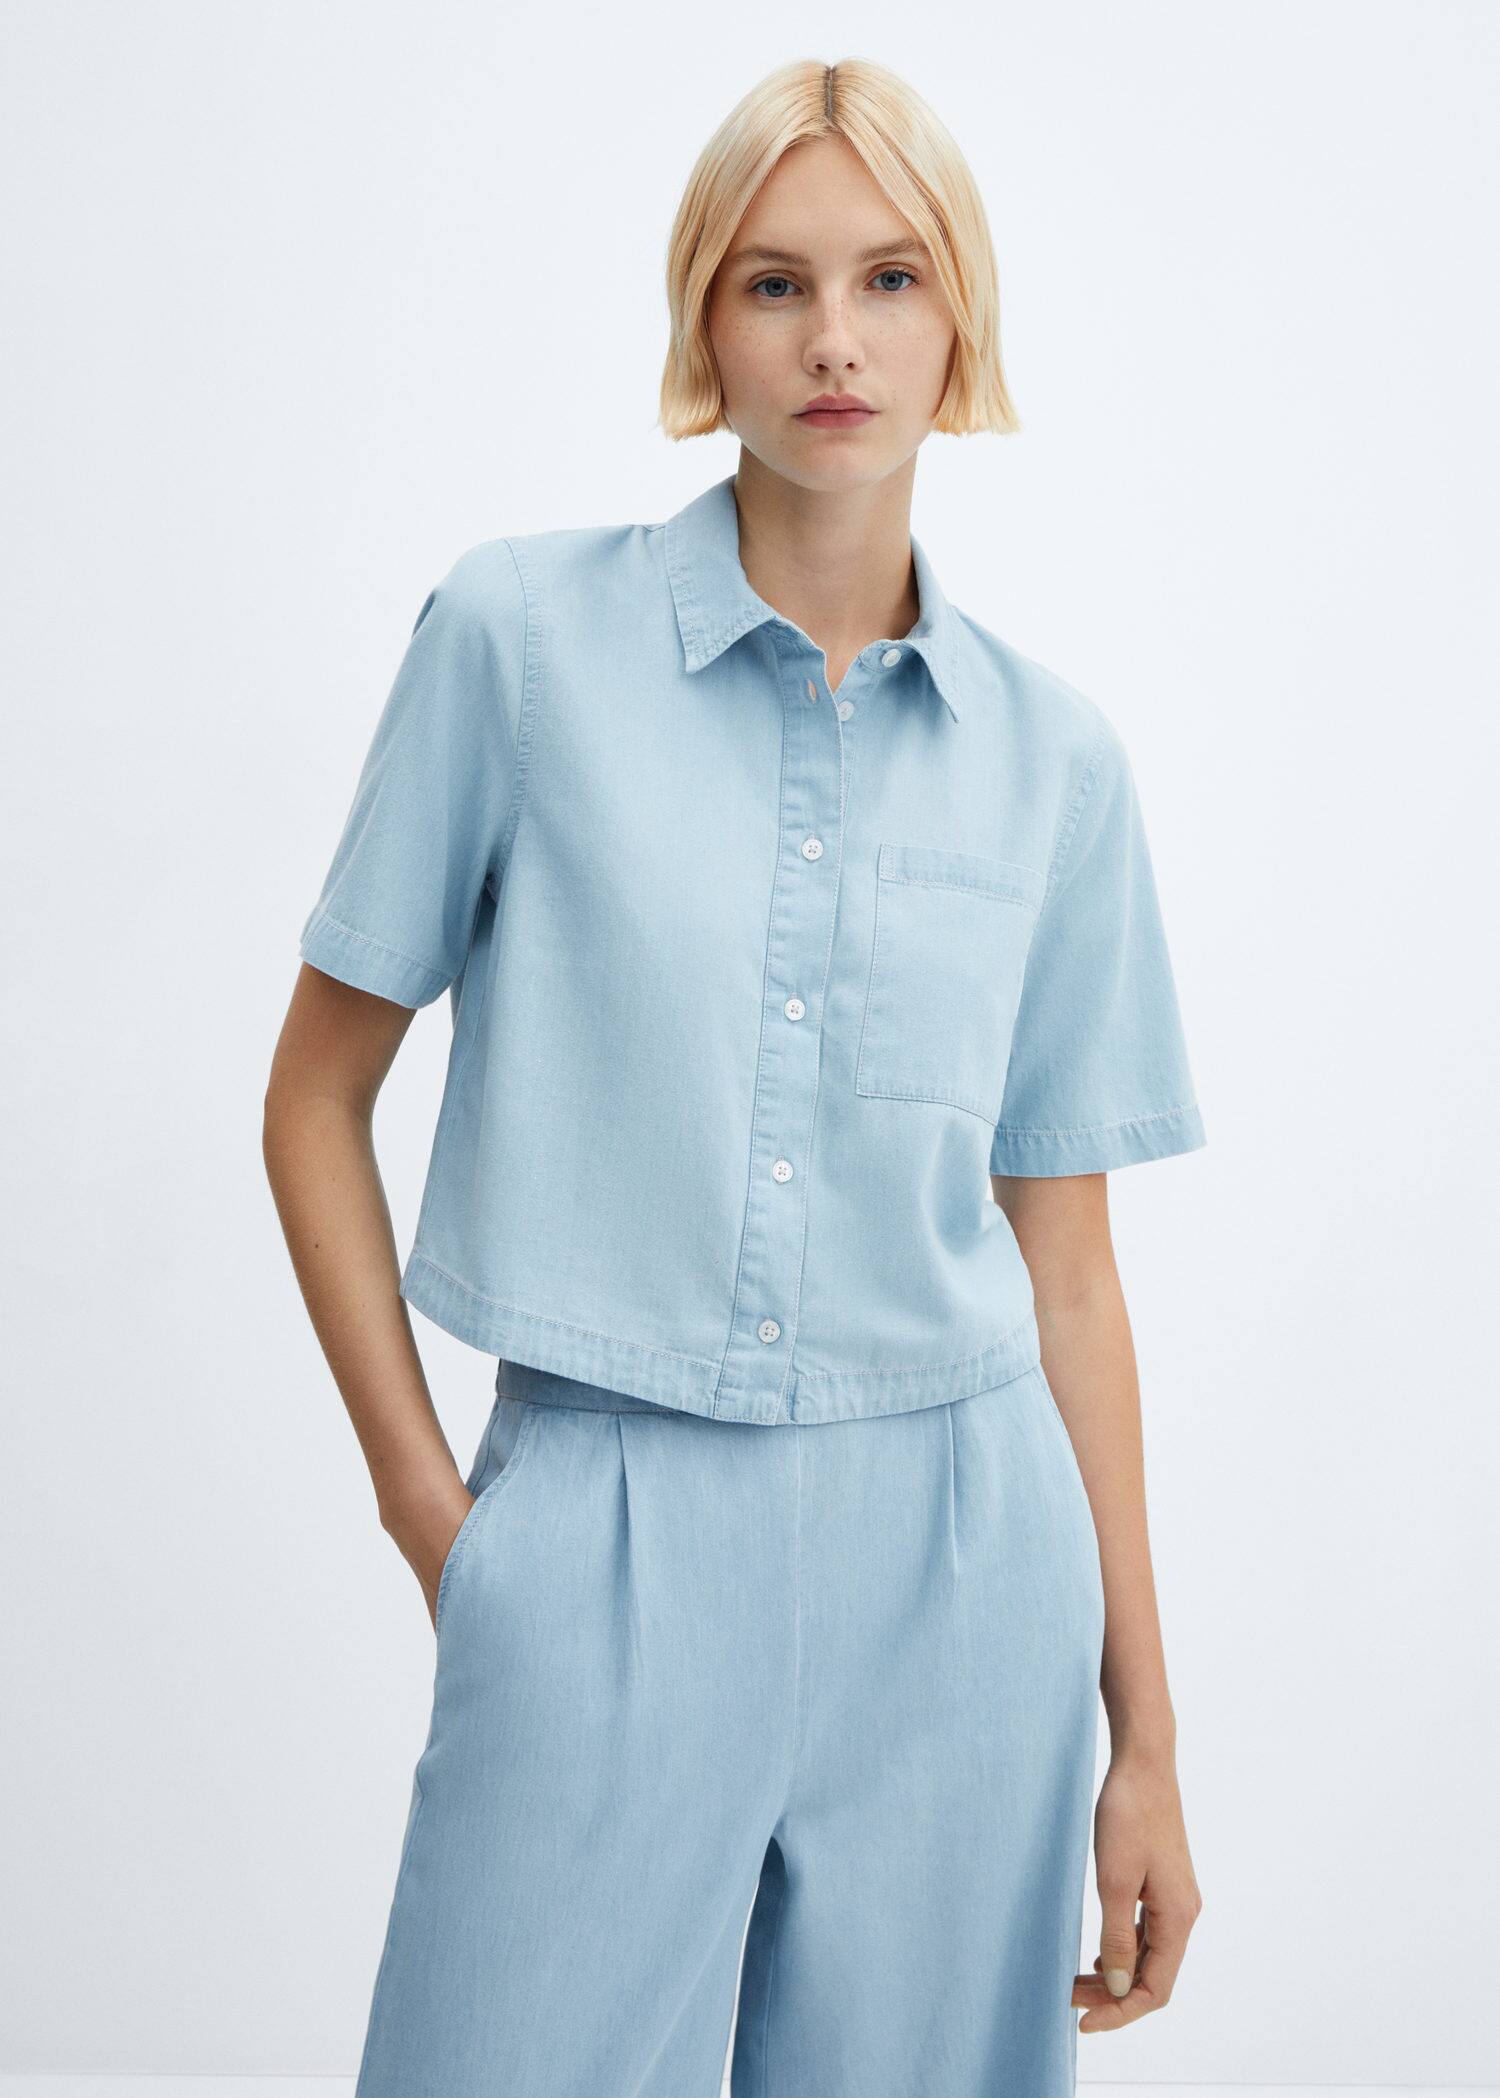 Women's Solid Color Simple Slim Denim Shirt Casual Long Sleeve Shirt Jacket  | eBay